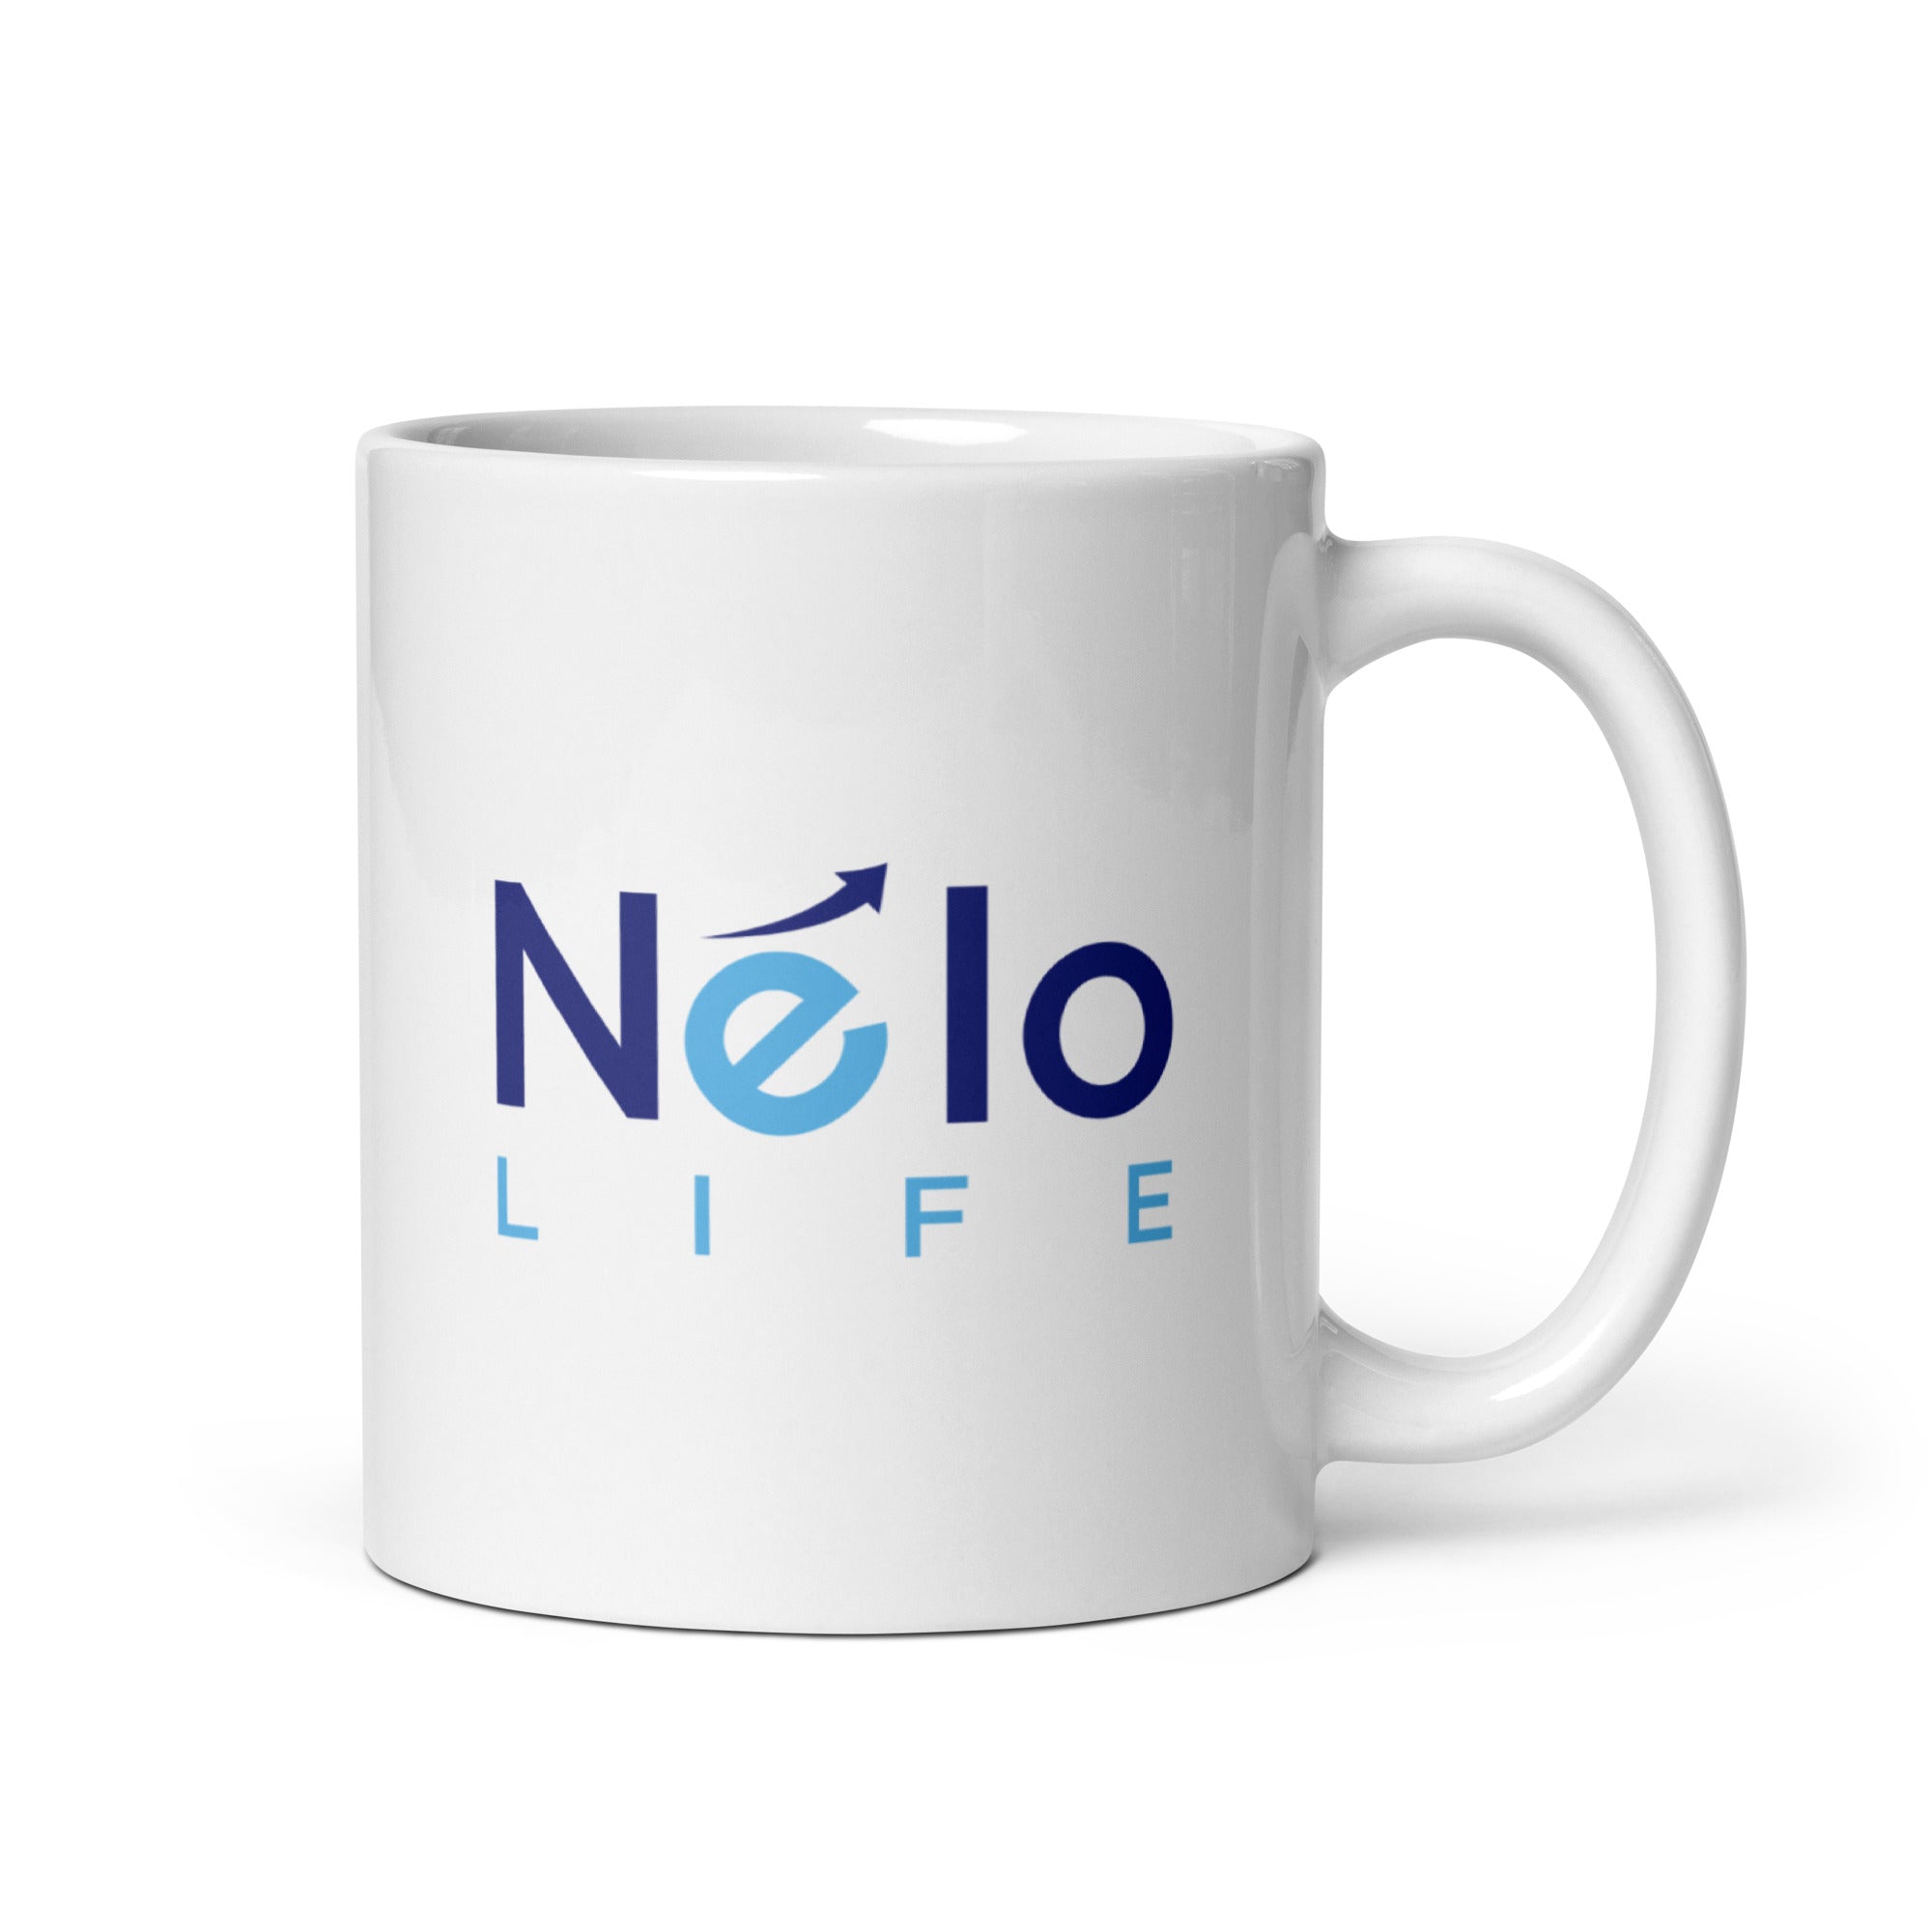 NELO LIFE coffee mug